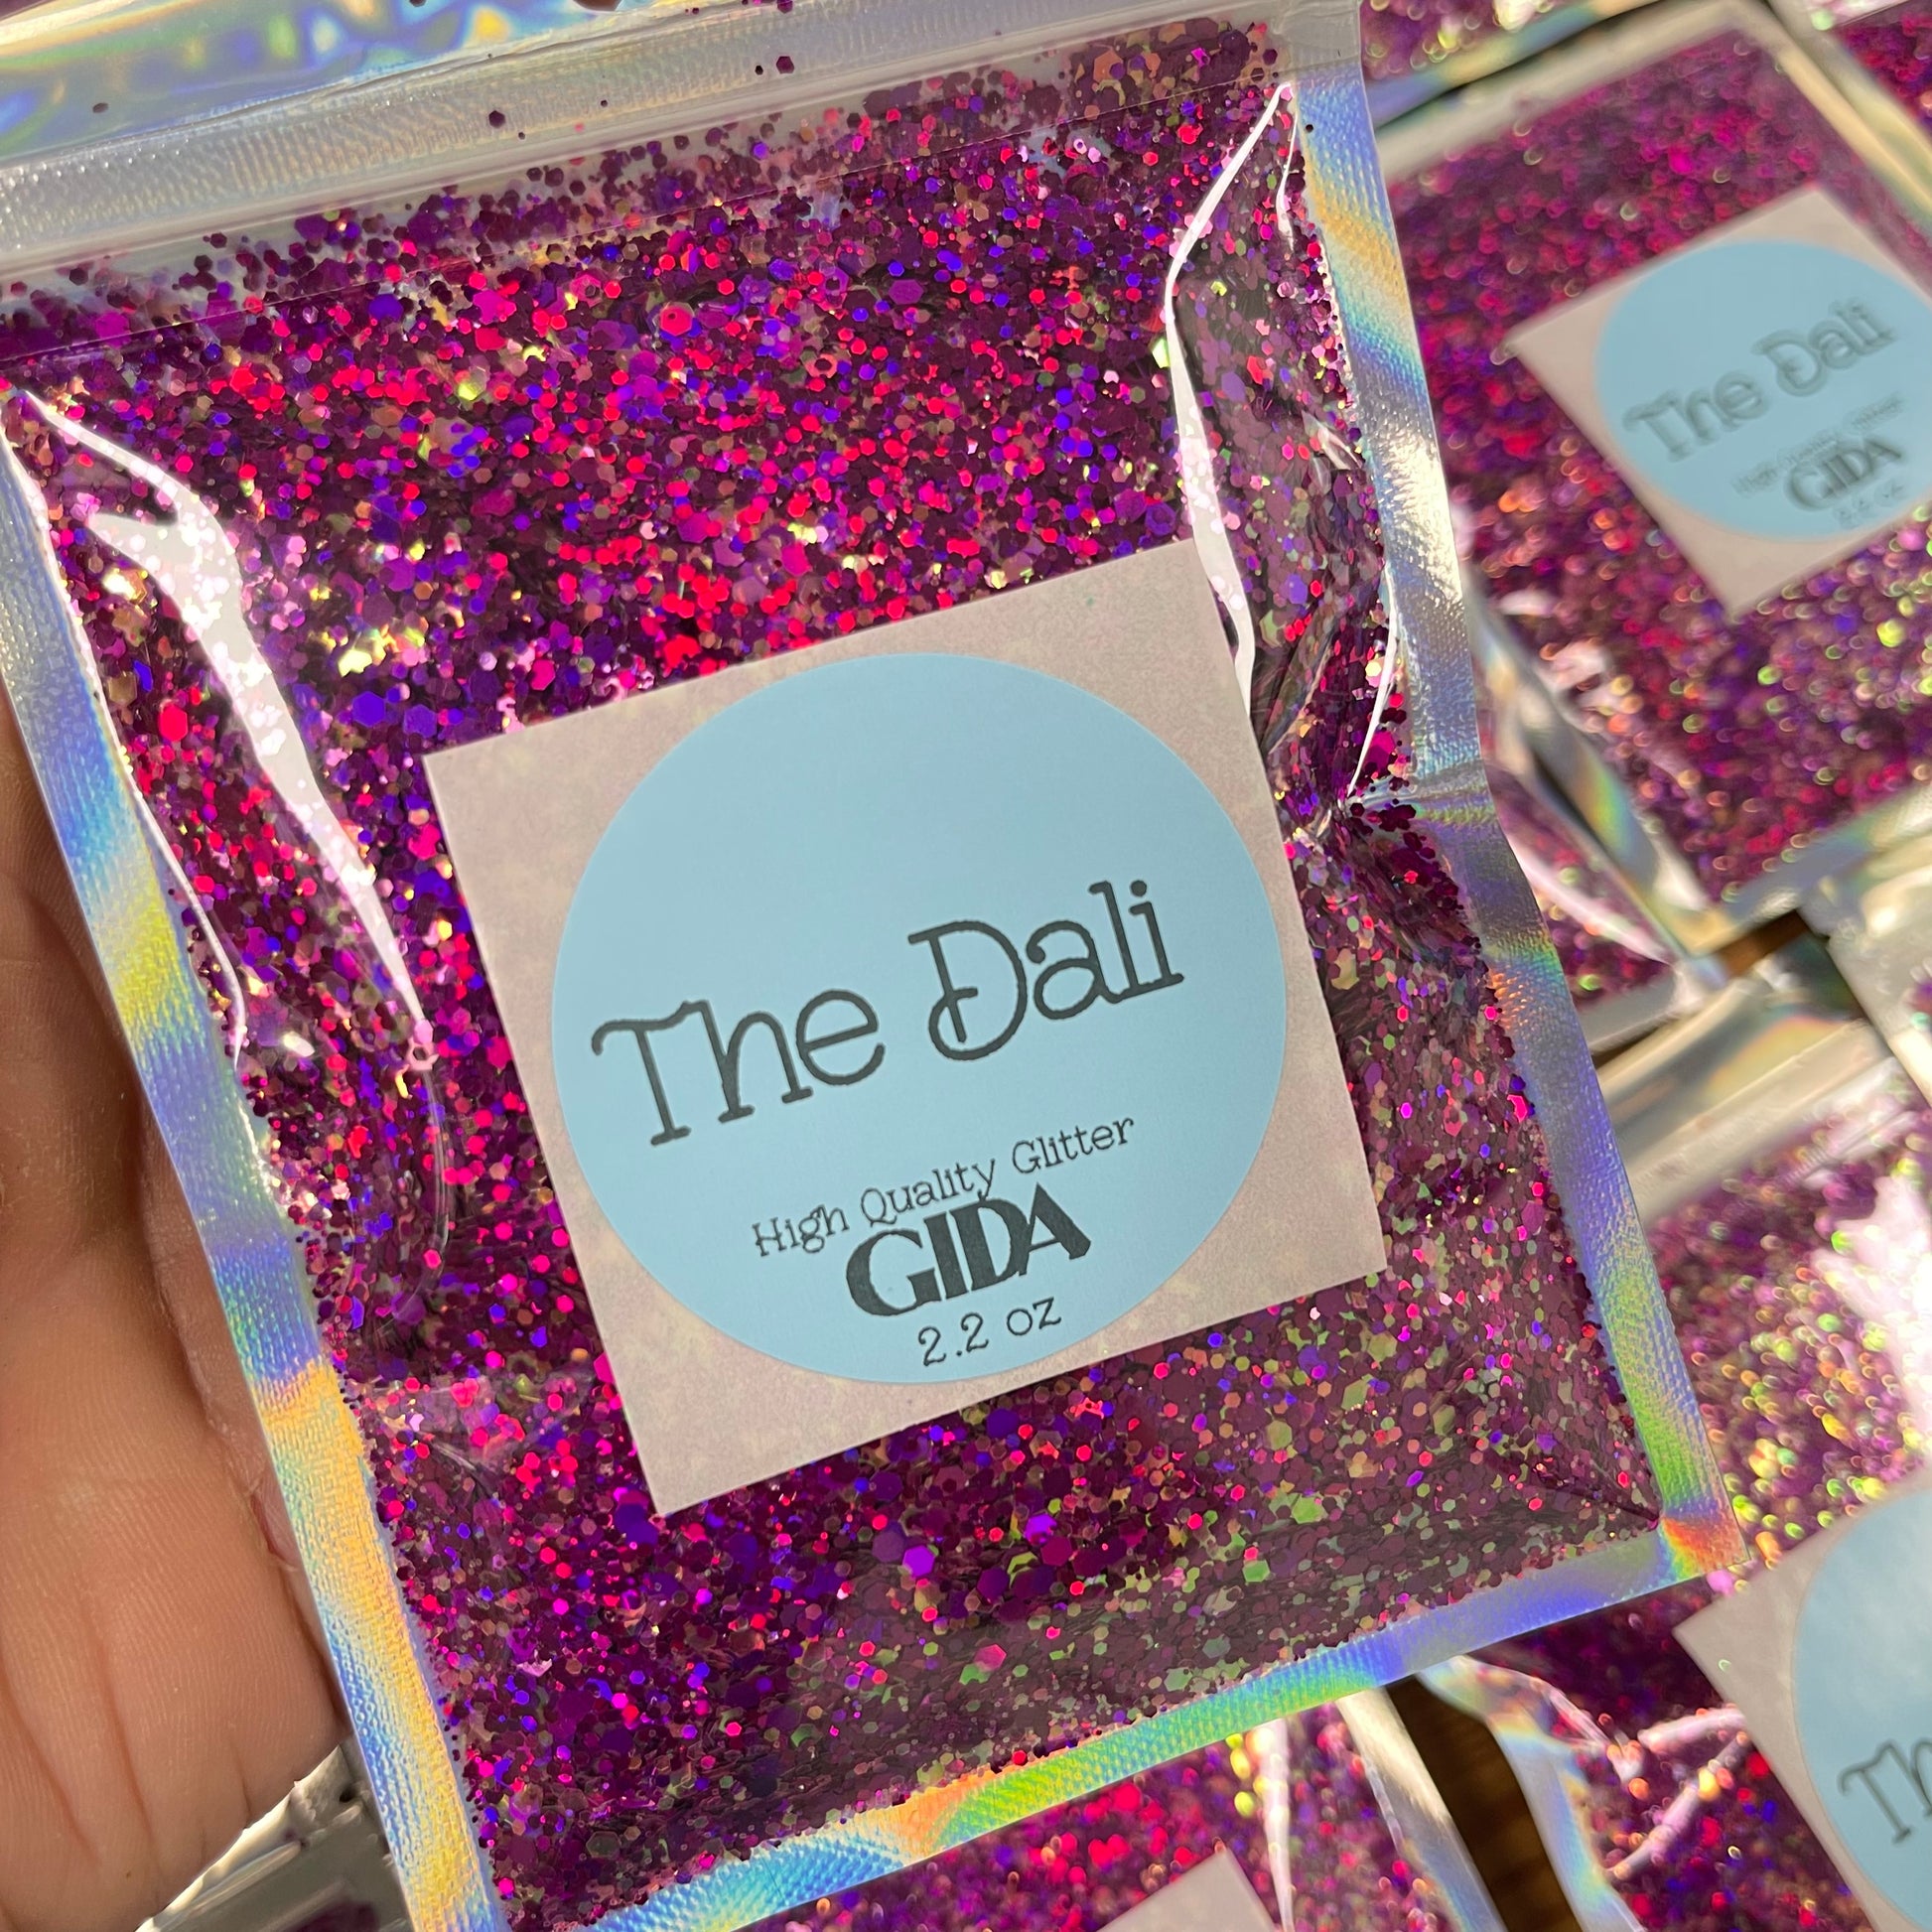 The Dali chunky Glitter - 2.2 oz - GIDA DESIGN 